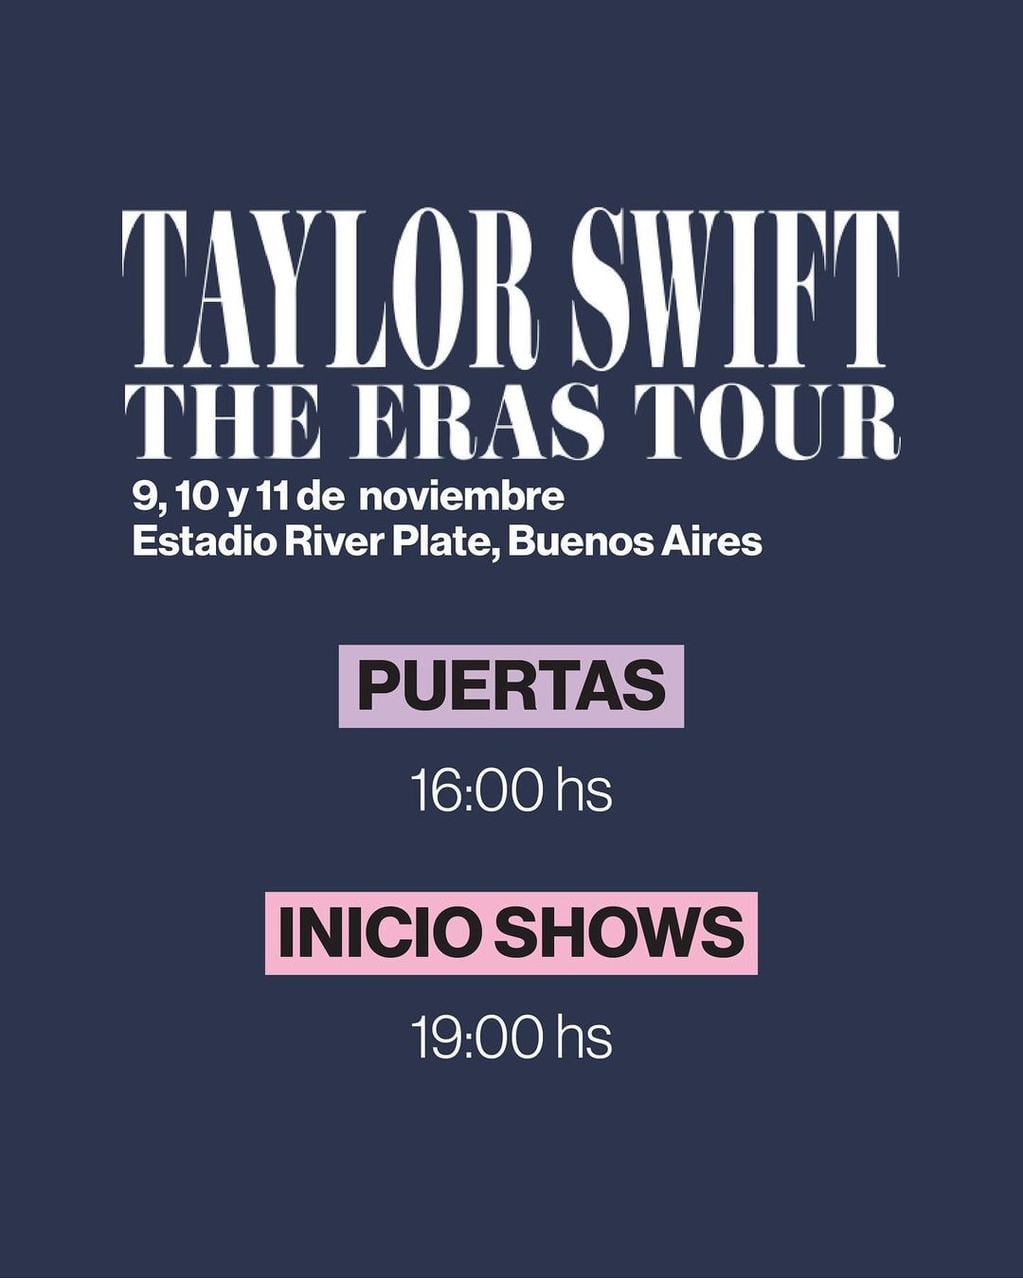 Taylor Swift en Argentina: información útil de cara al primer show en River. (DF Entertainment)